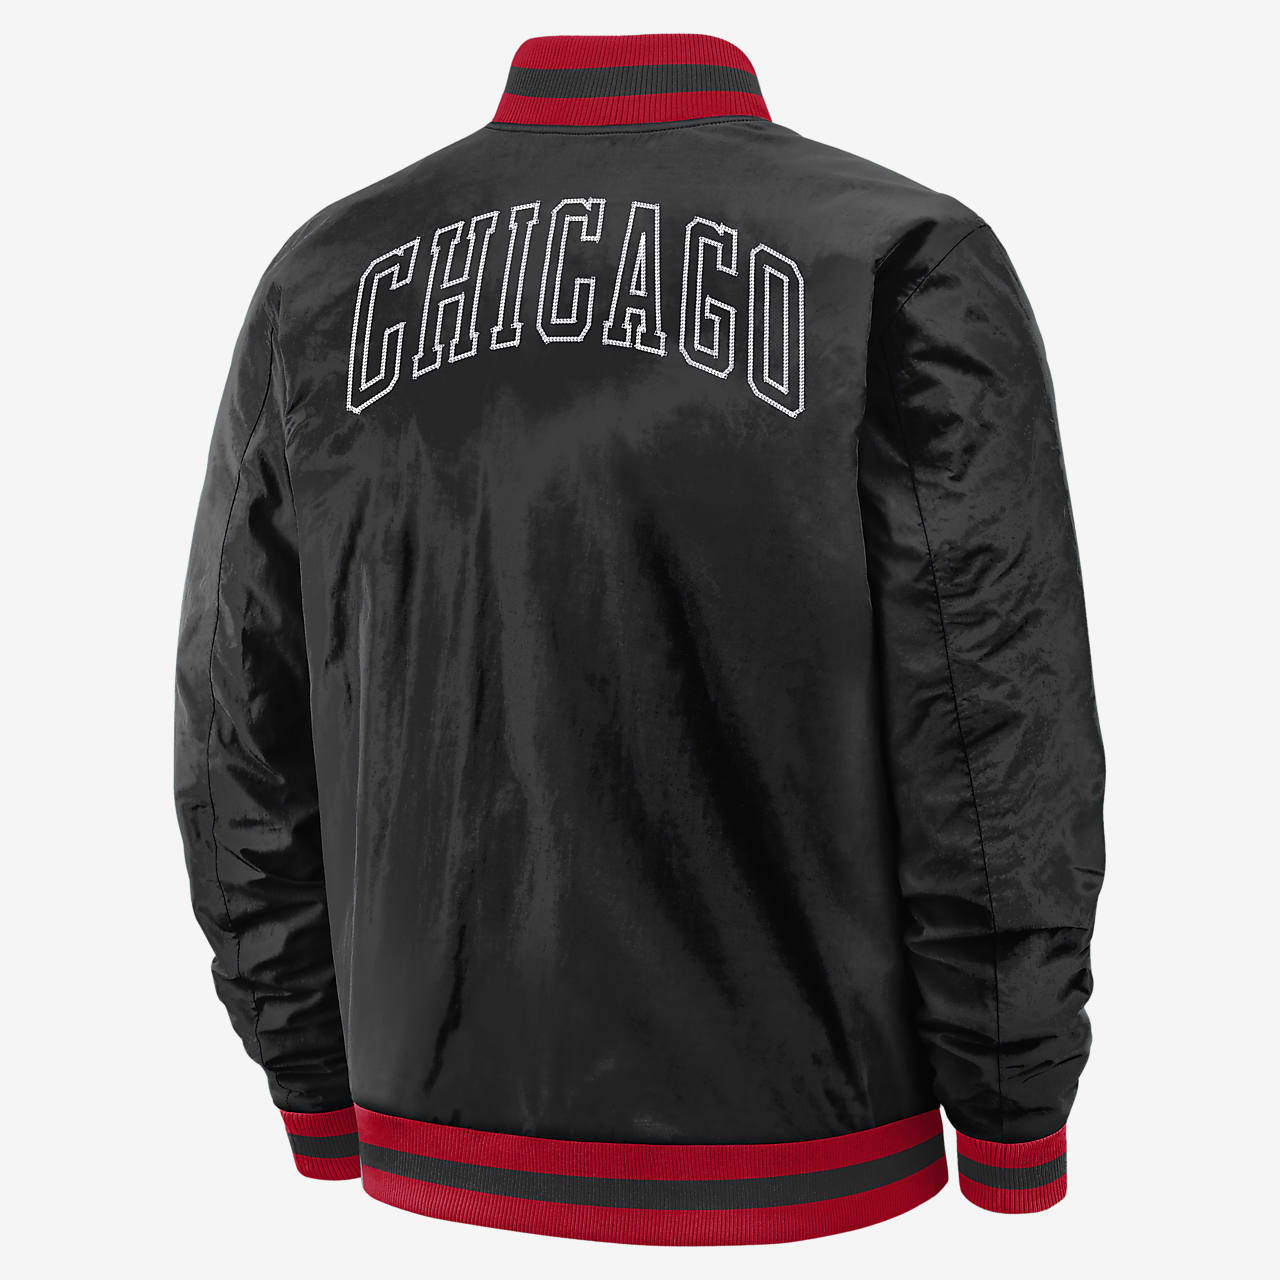 Chicago Bulls Courtside Men's Nike NBA Reversible Jacket.